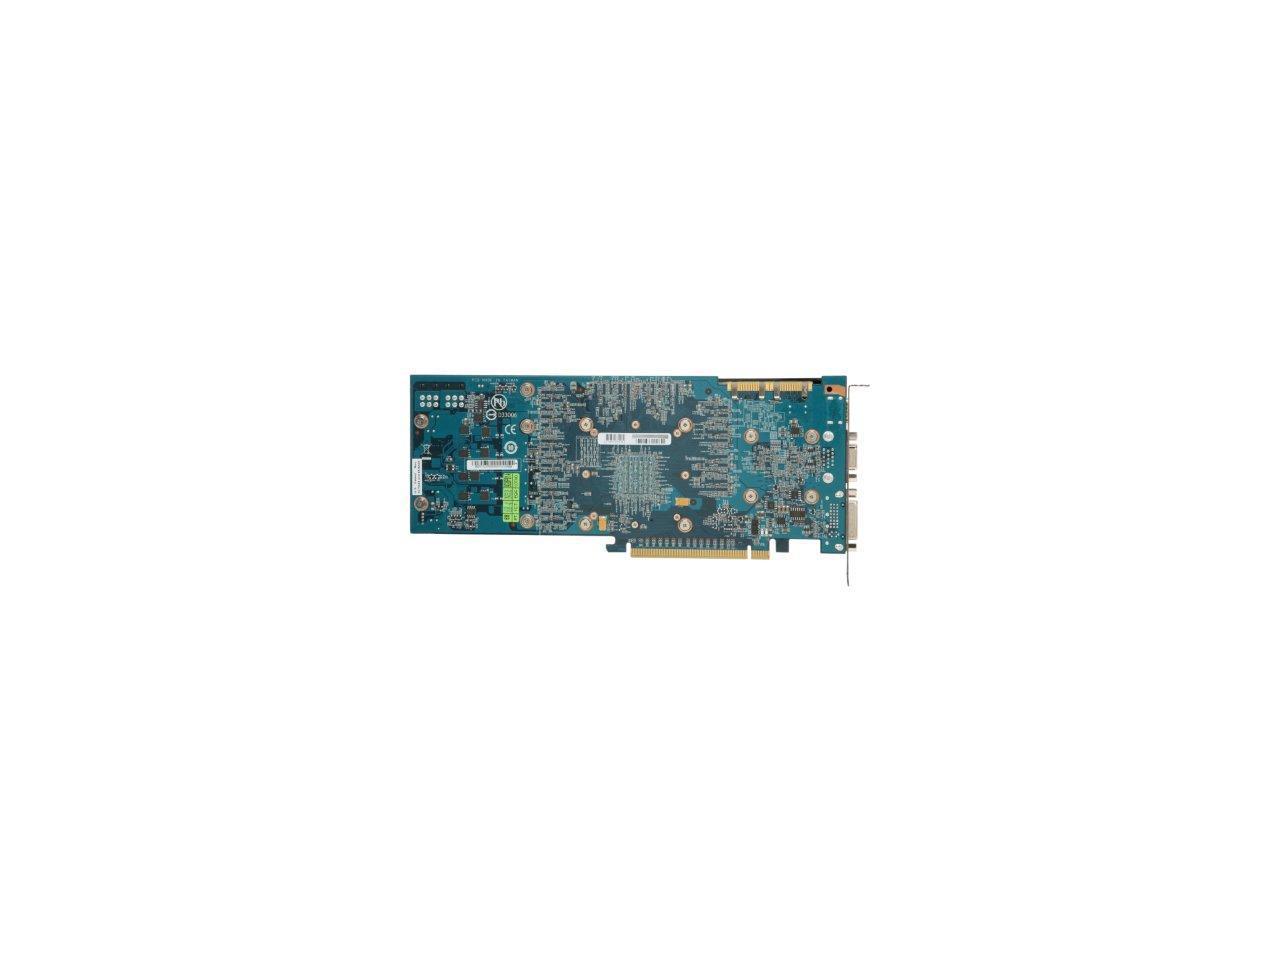 Gigabyte GV-N26SO-896I Geforce GTX 260 Videocard Review - PCSTATS.com